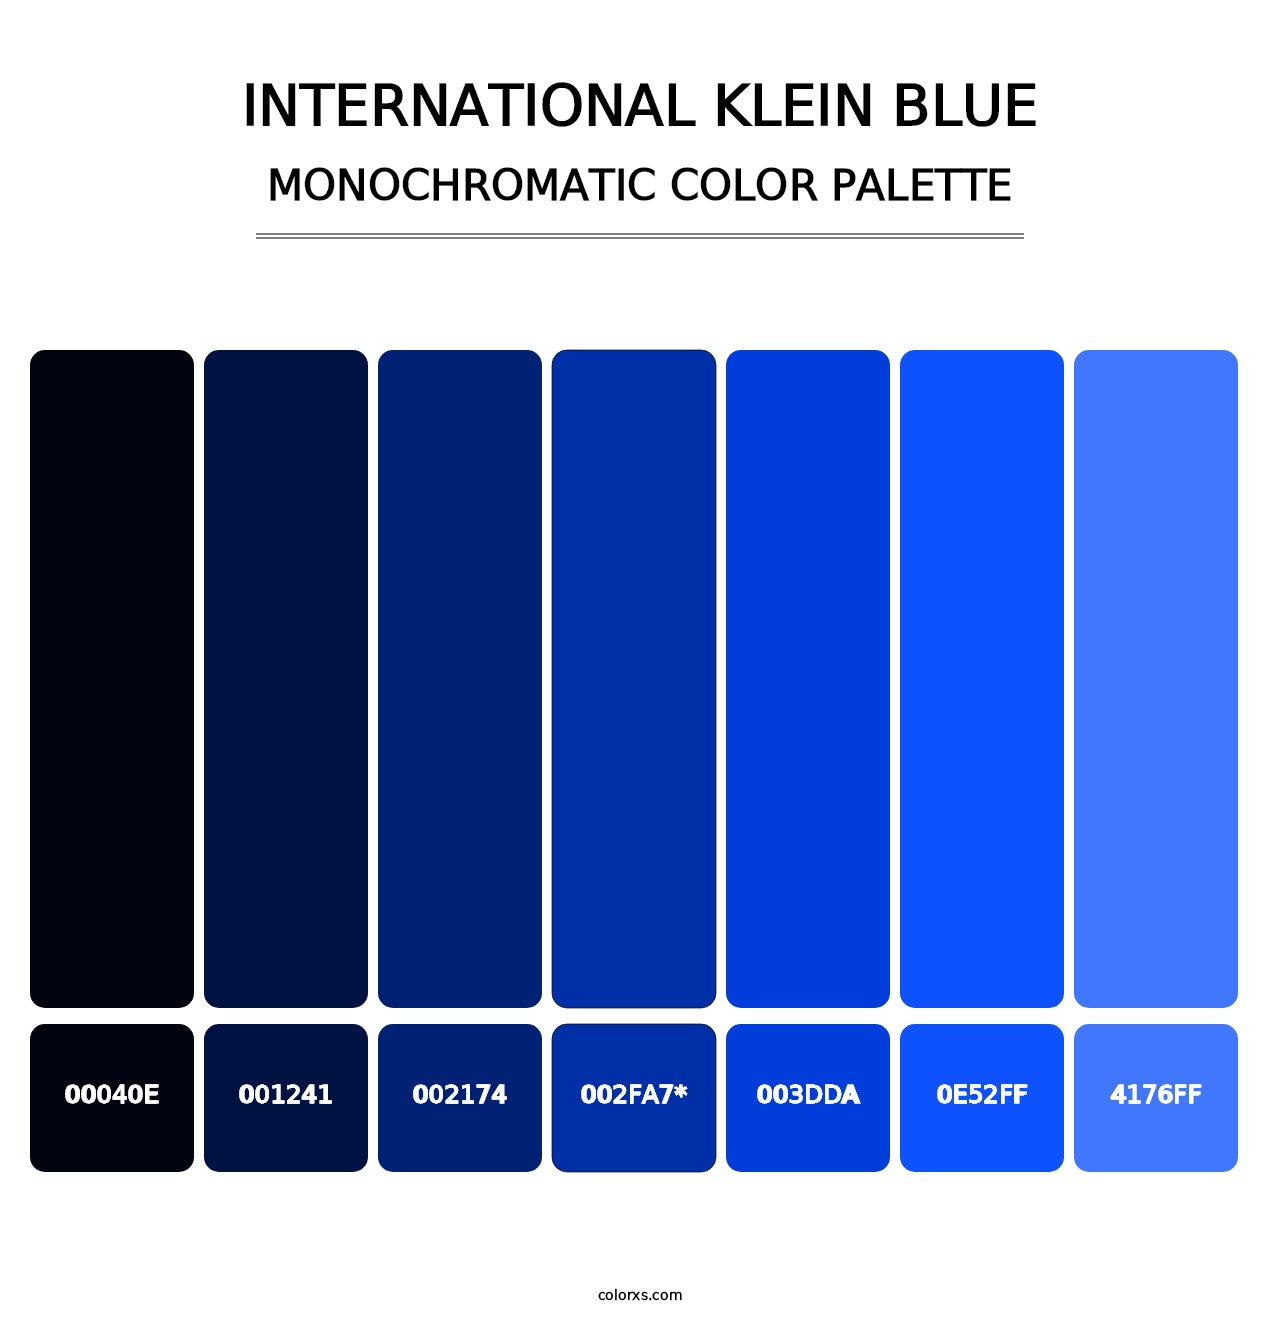 International Klein Blue - Monochromatic Color Palette